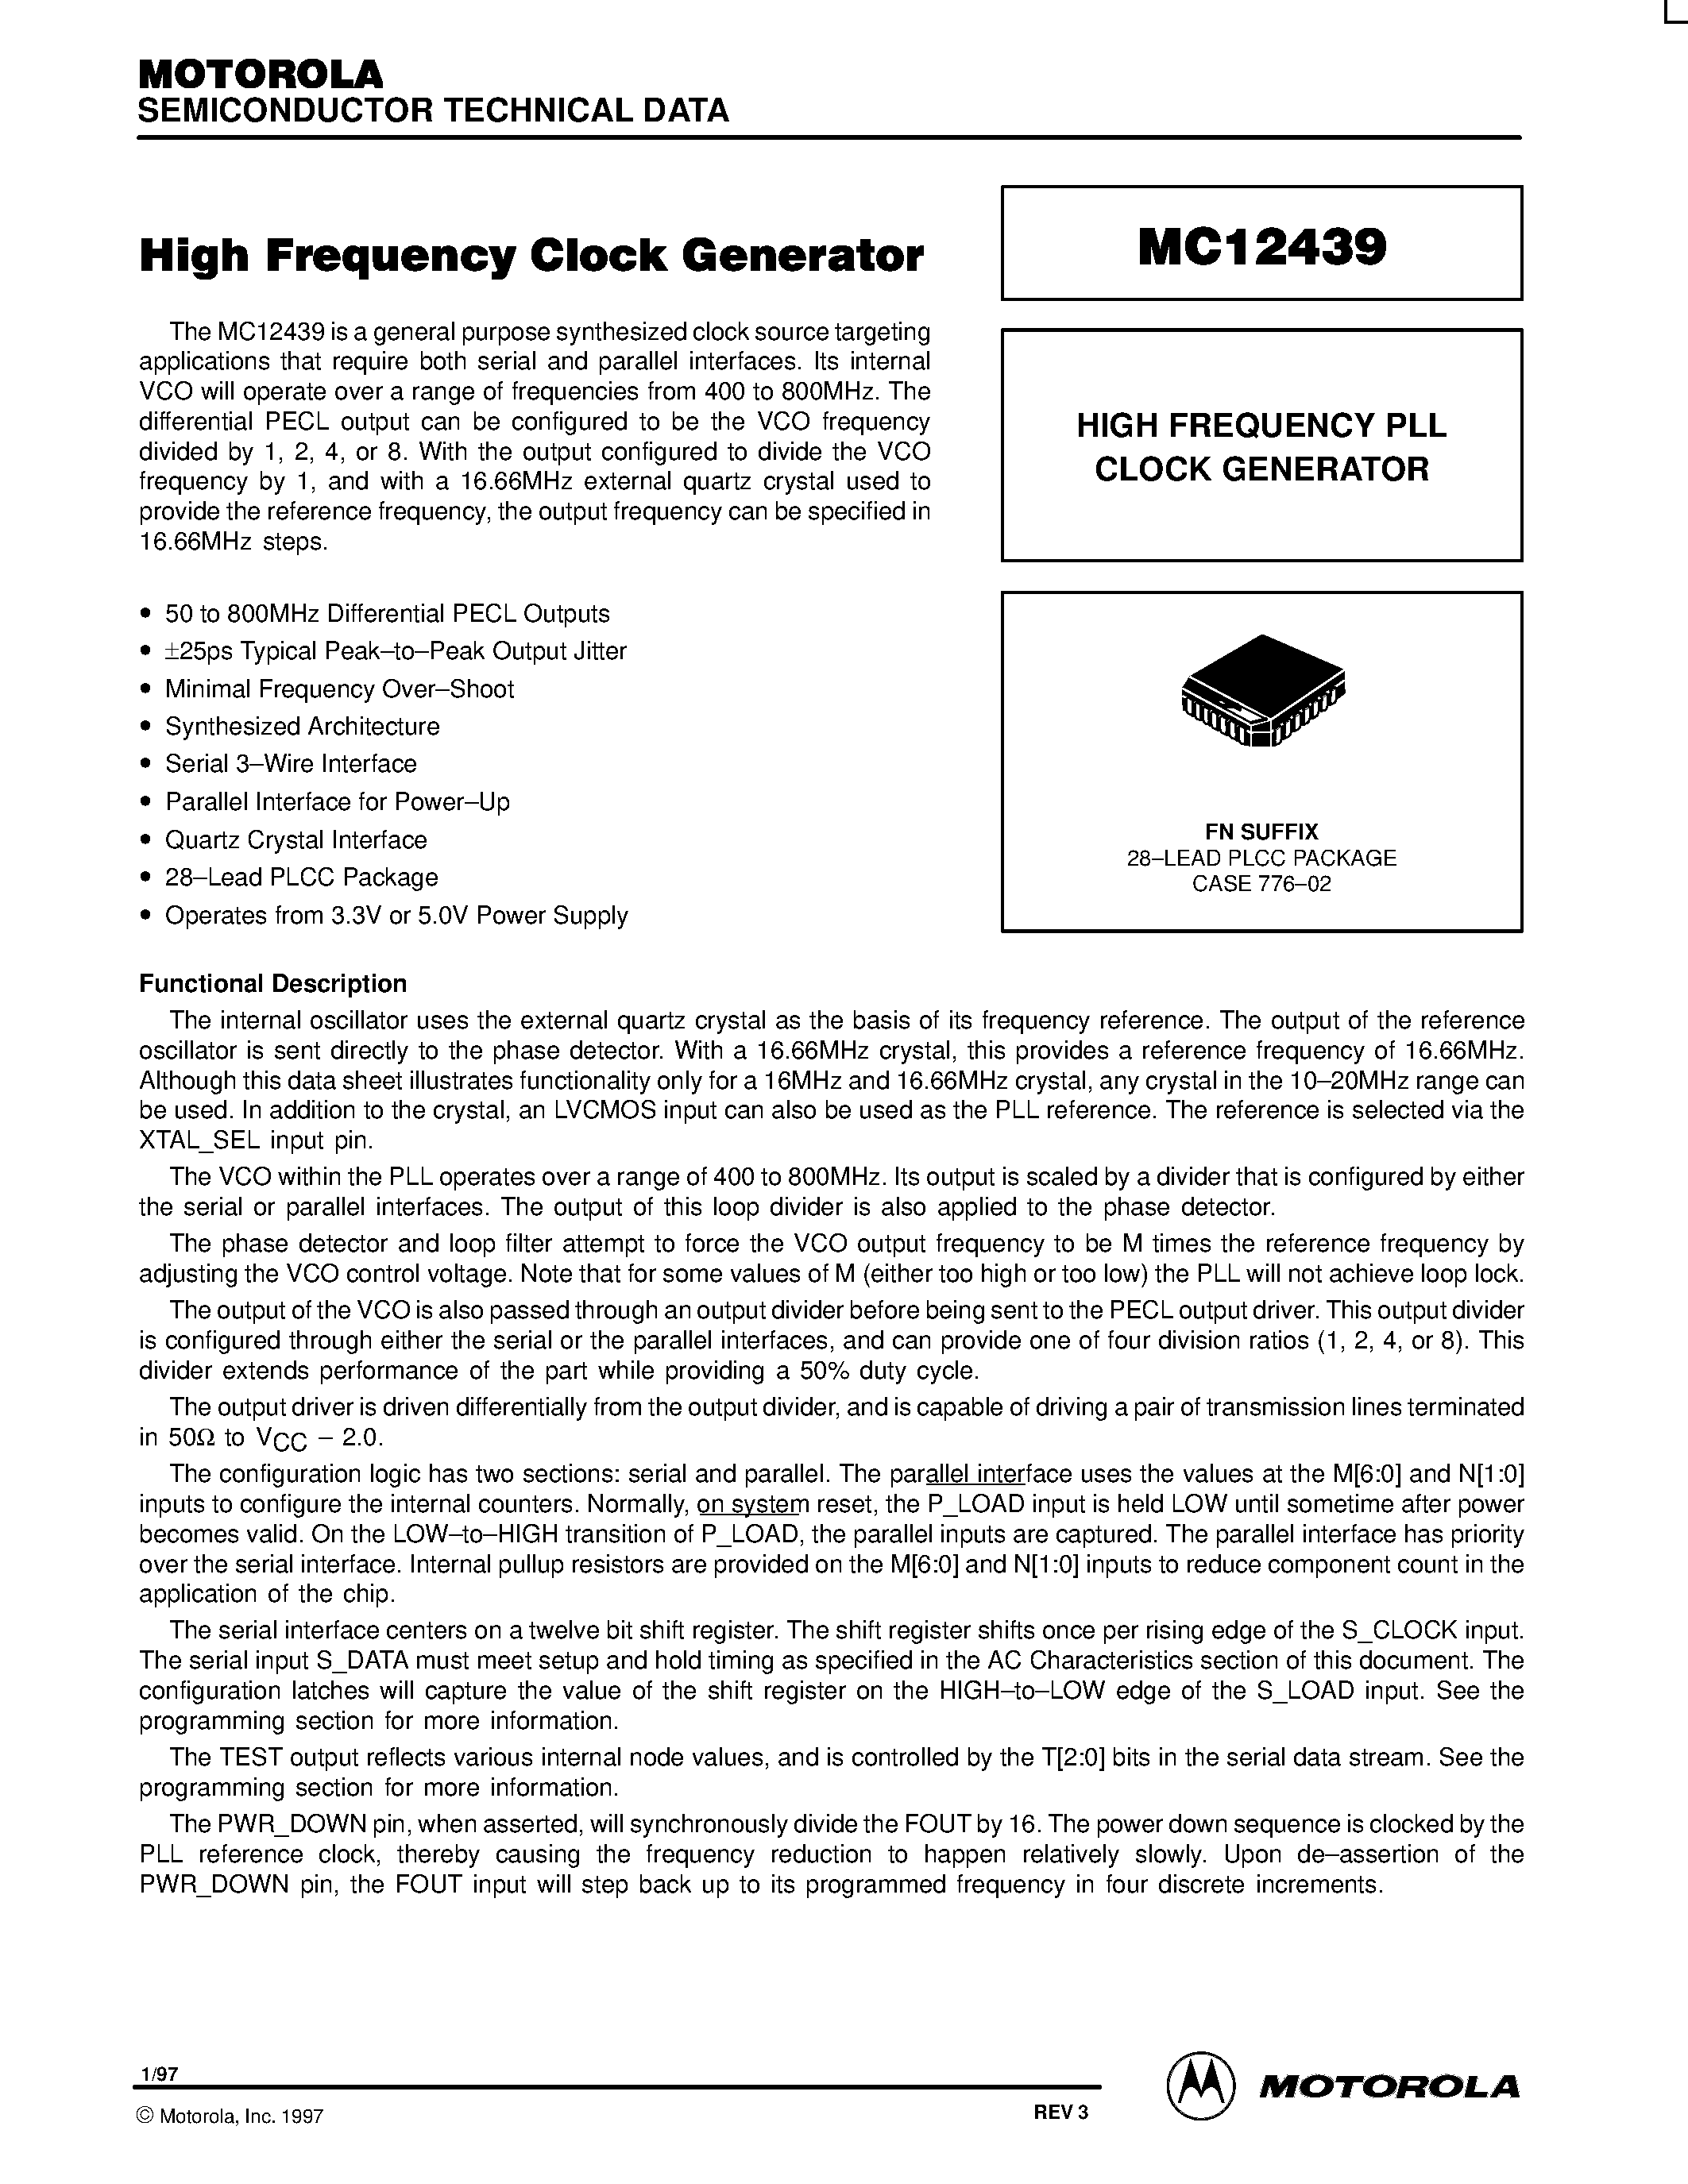 Datasheet MC12439 - HIGH FREQUENCY PLL CLOCK GENERATOR page 1